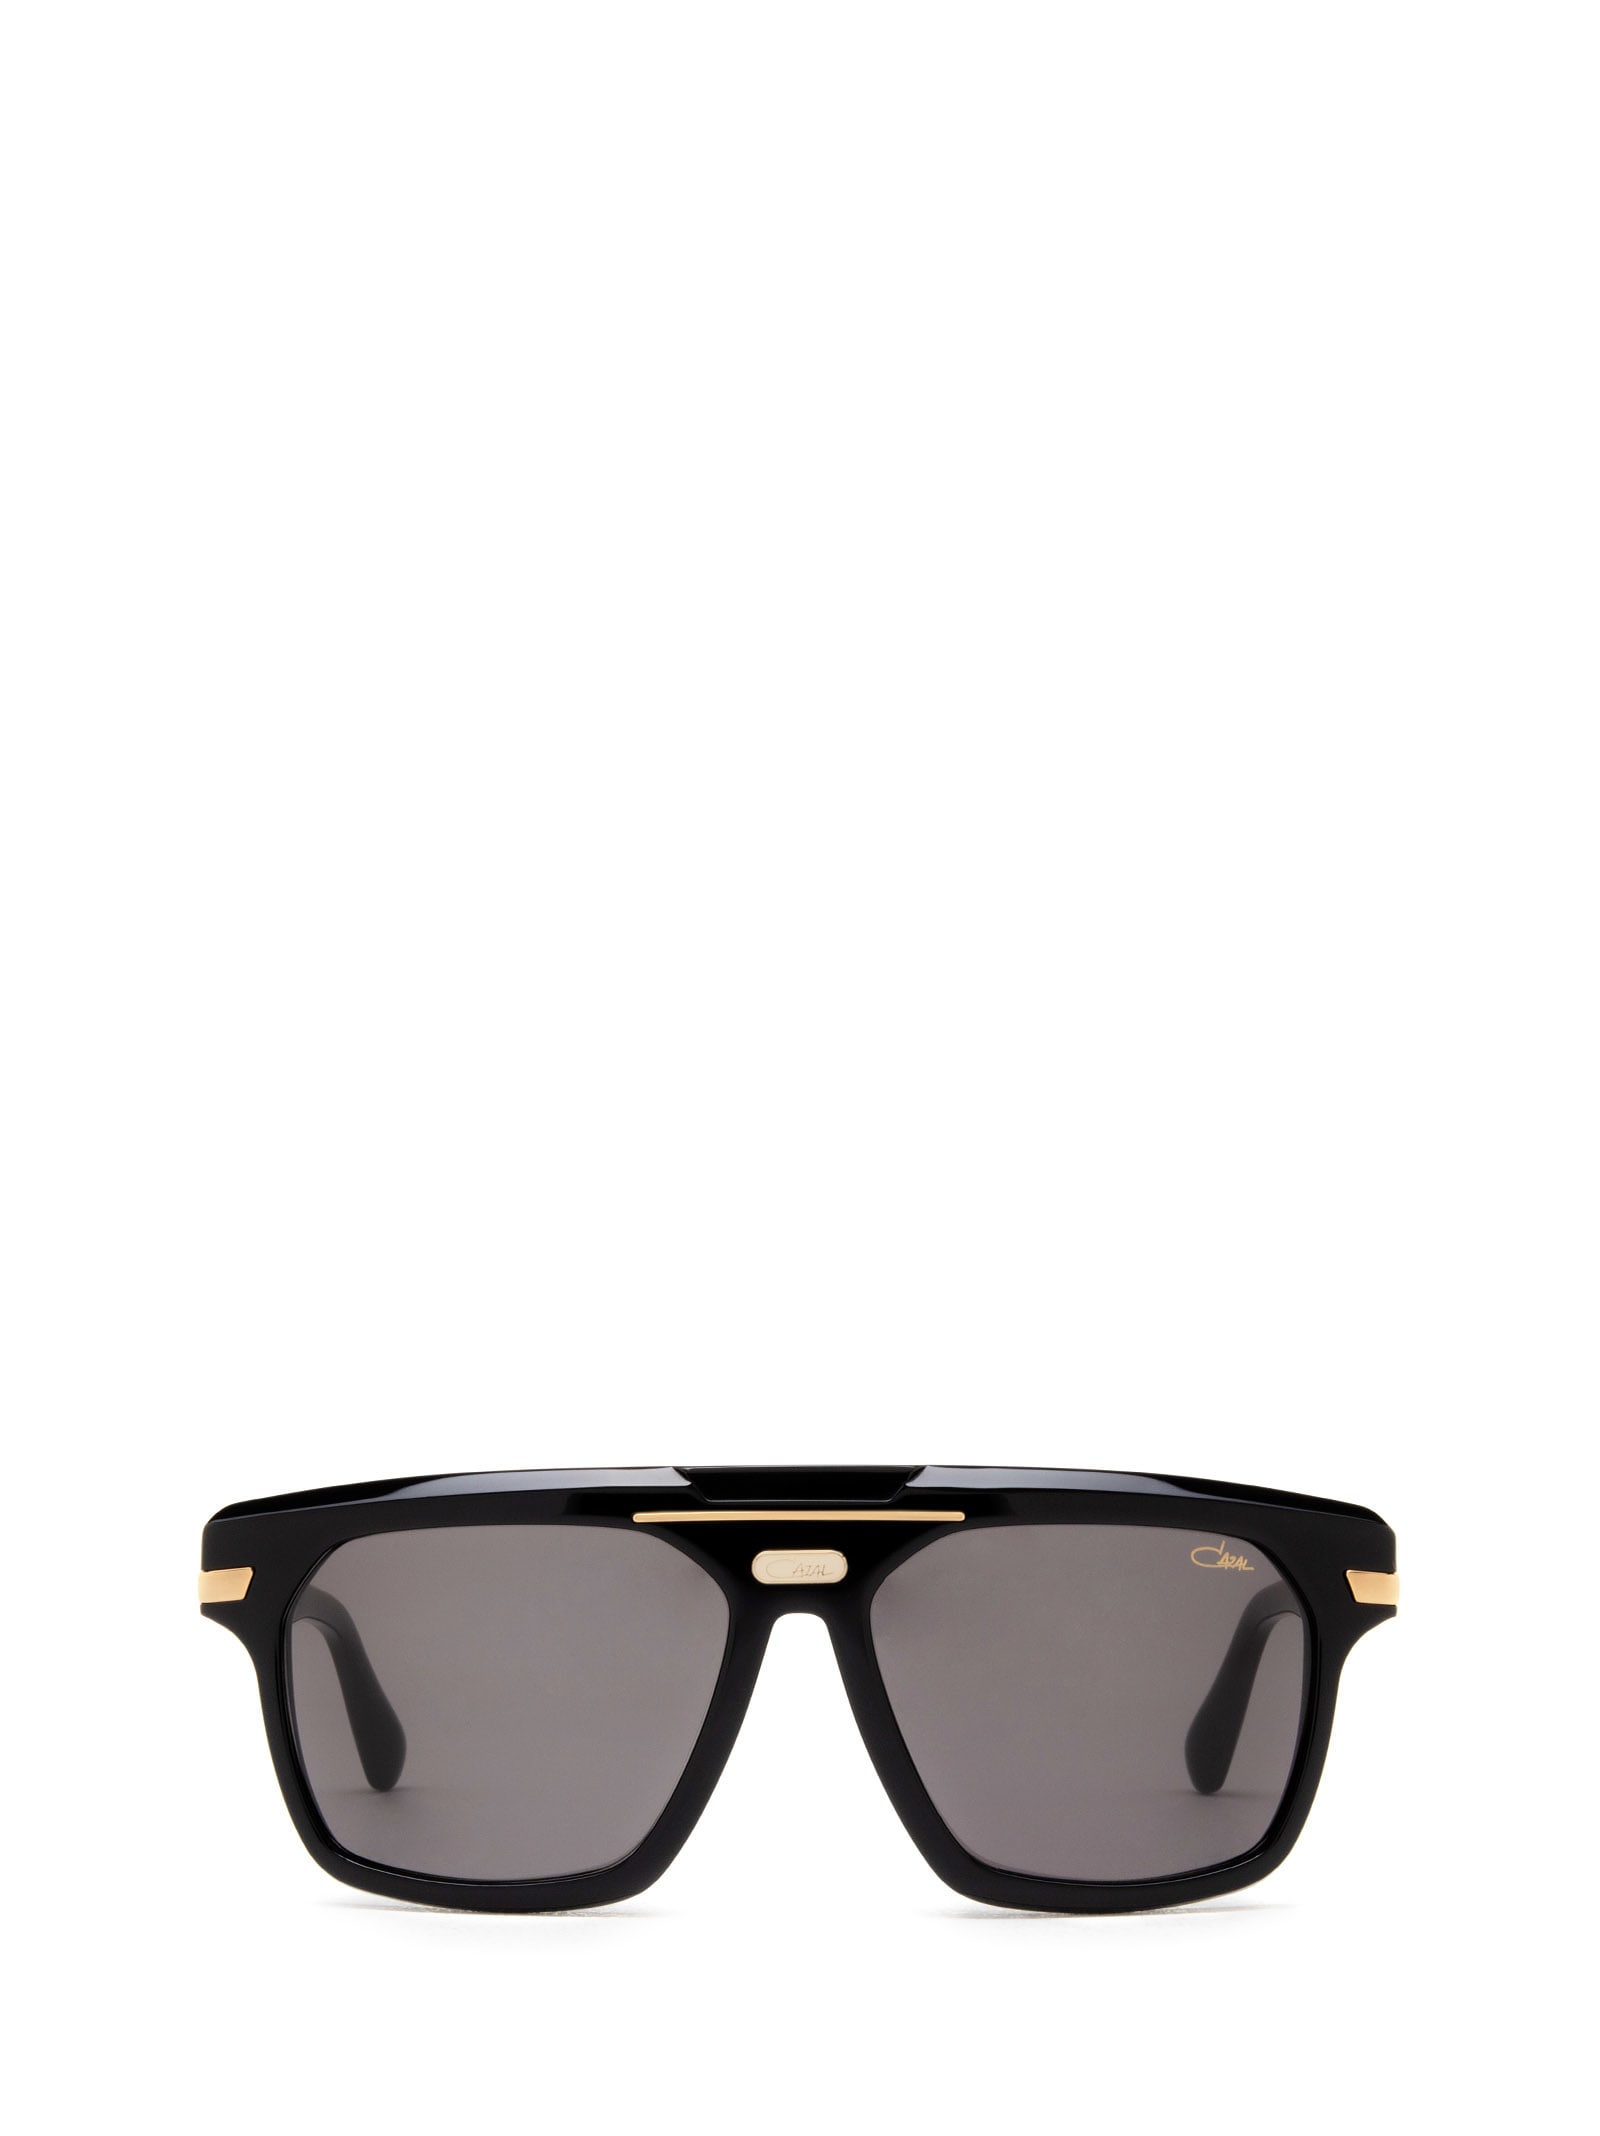 Cazal 8040 Black - Gold Sunglasses